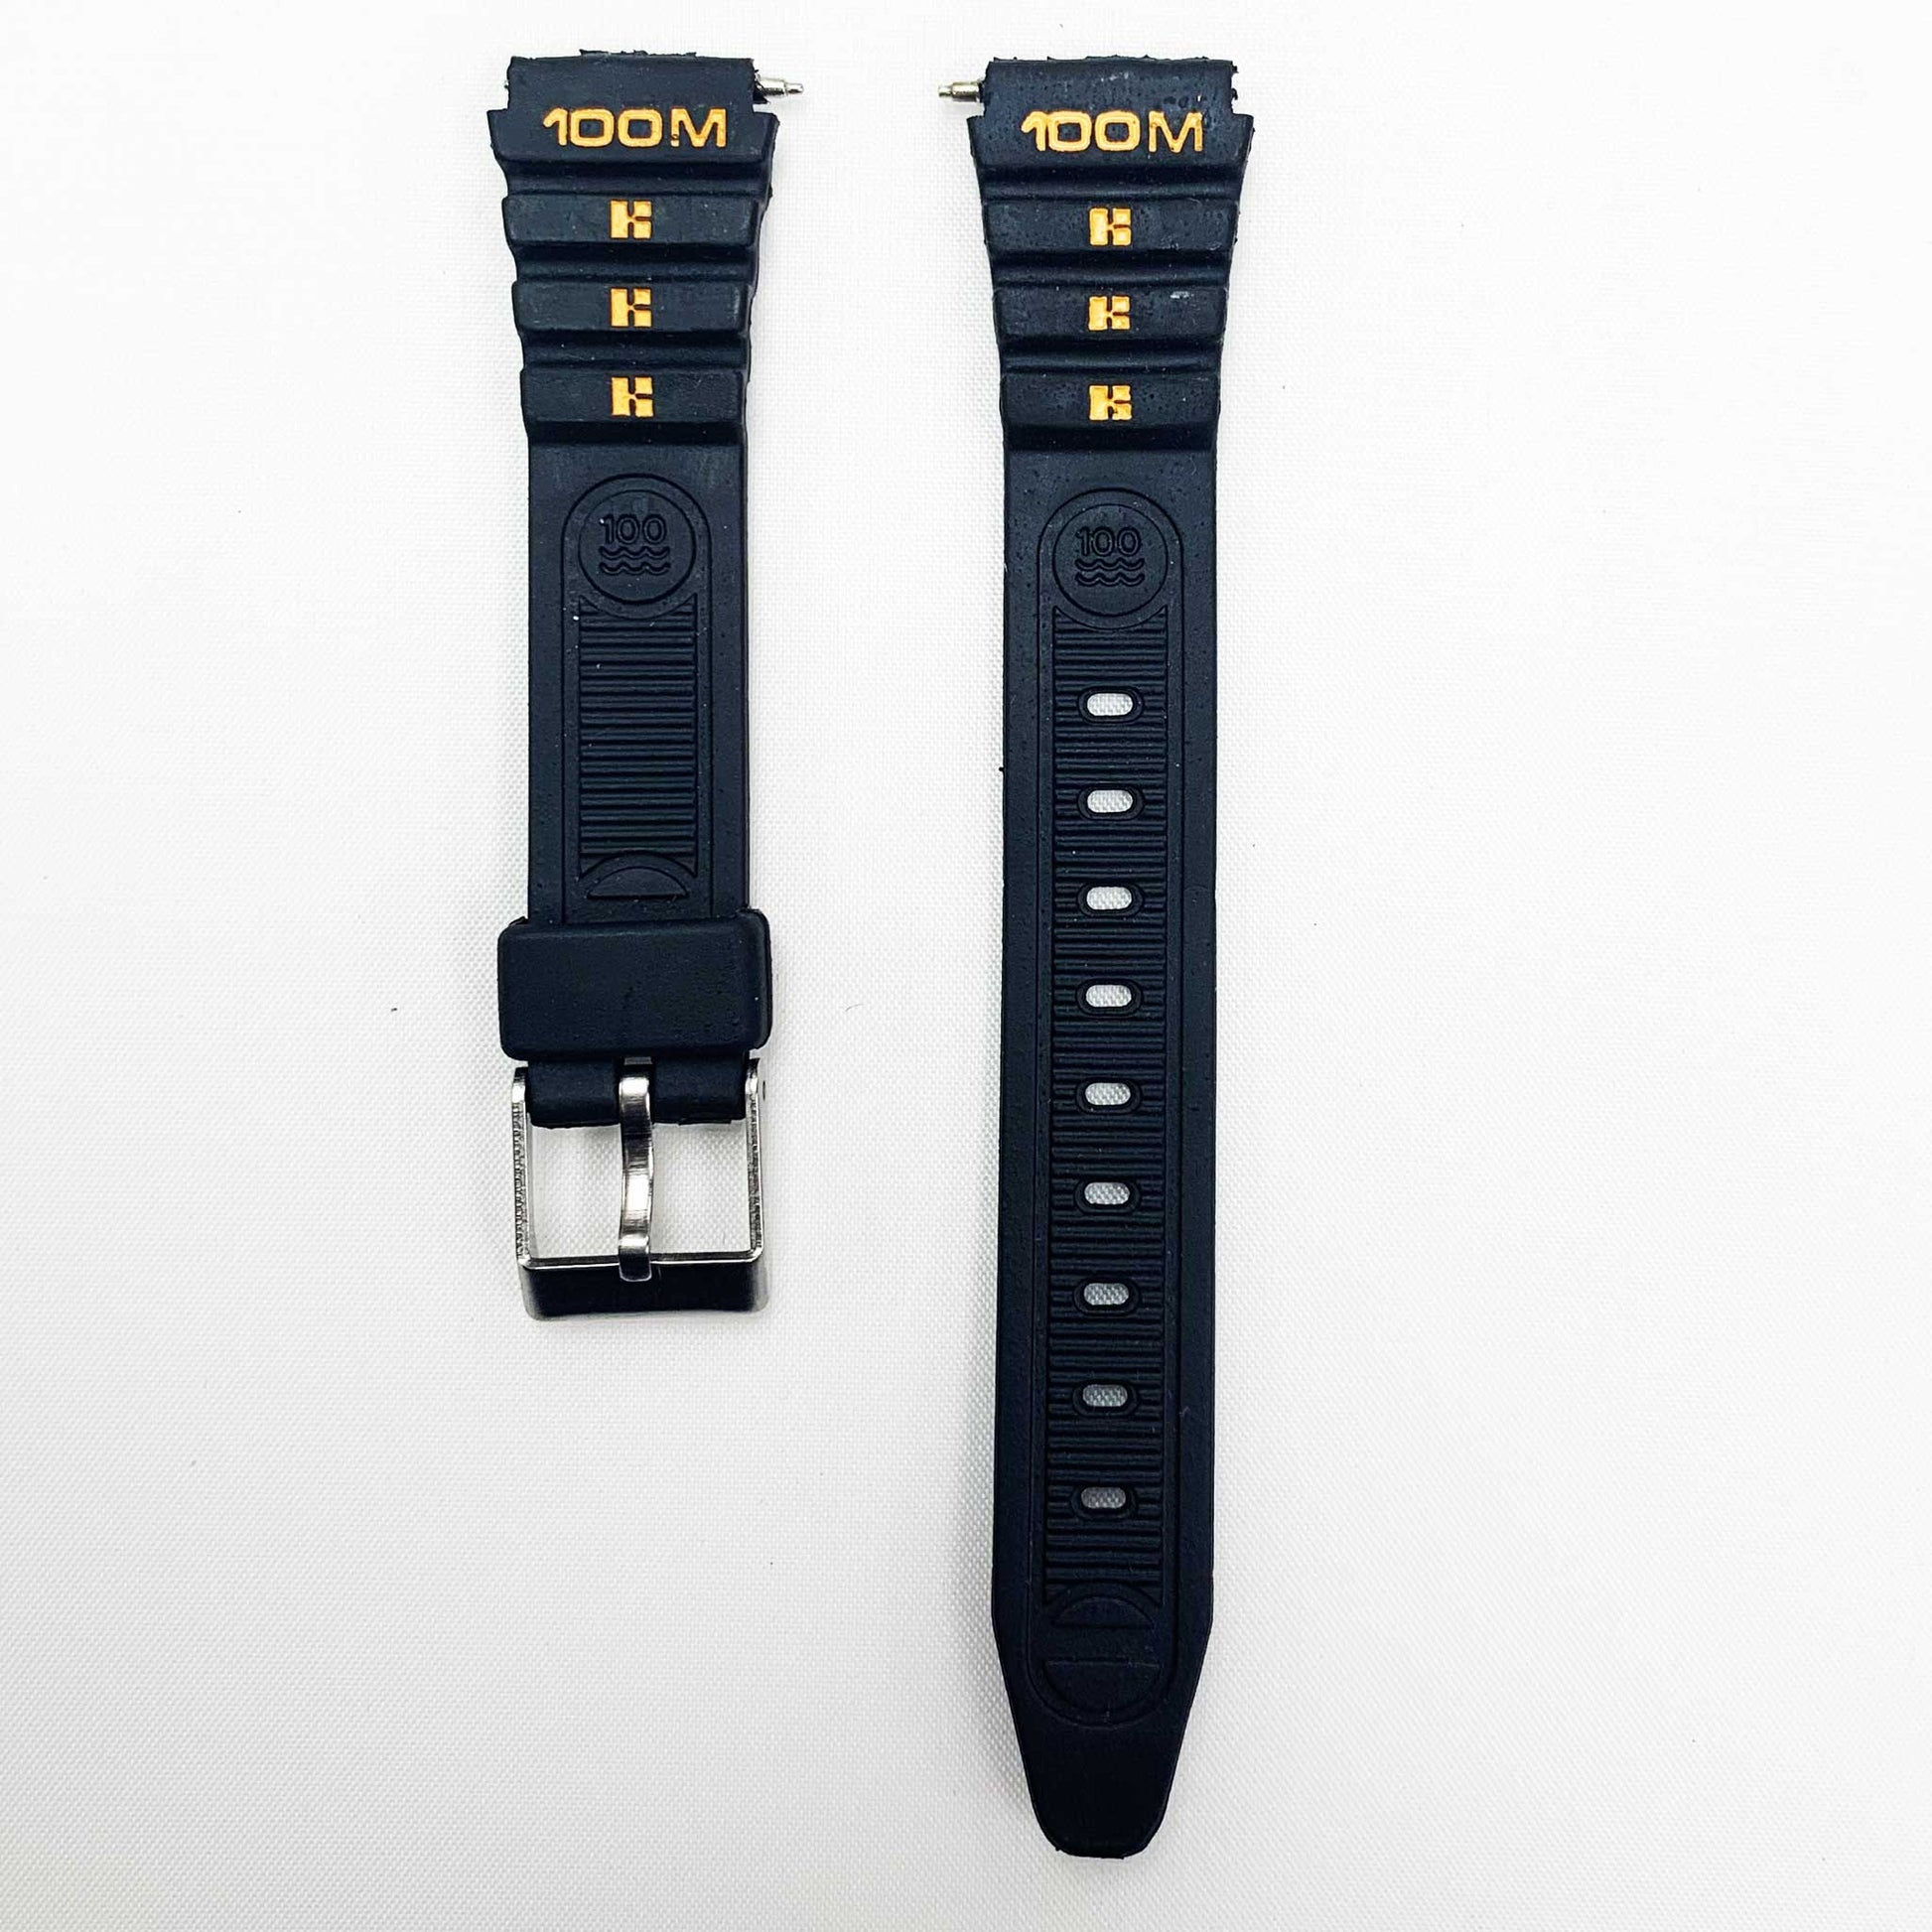 14mm pvc plastic watch band black kreisler sports for casio timex seiko citizen iron man watches